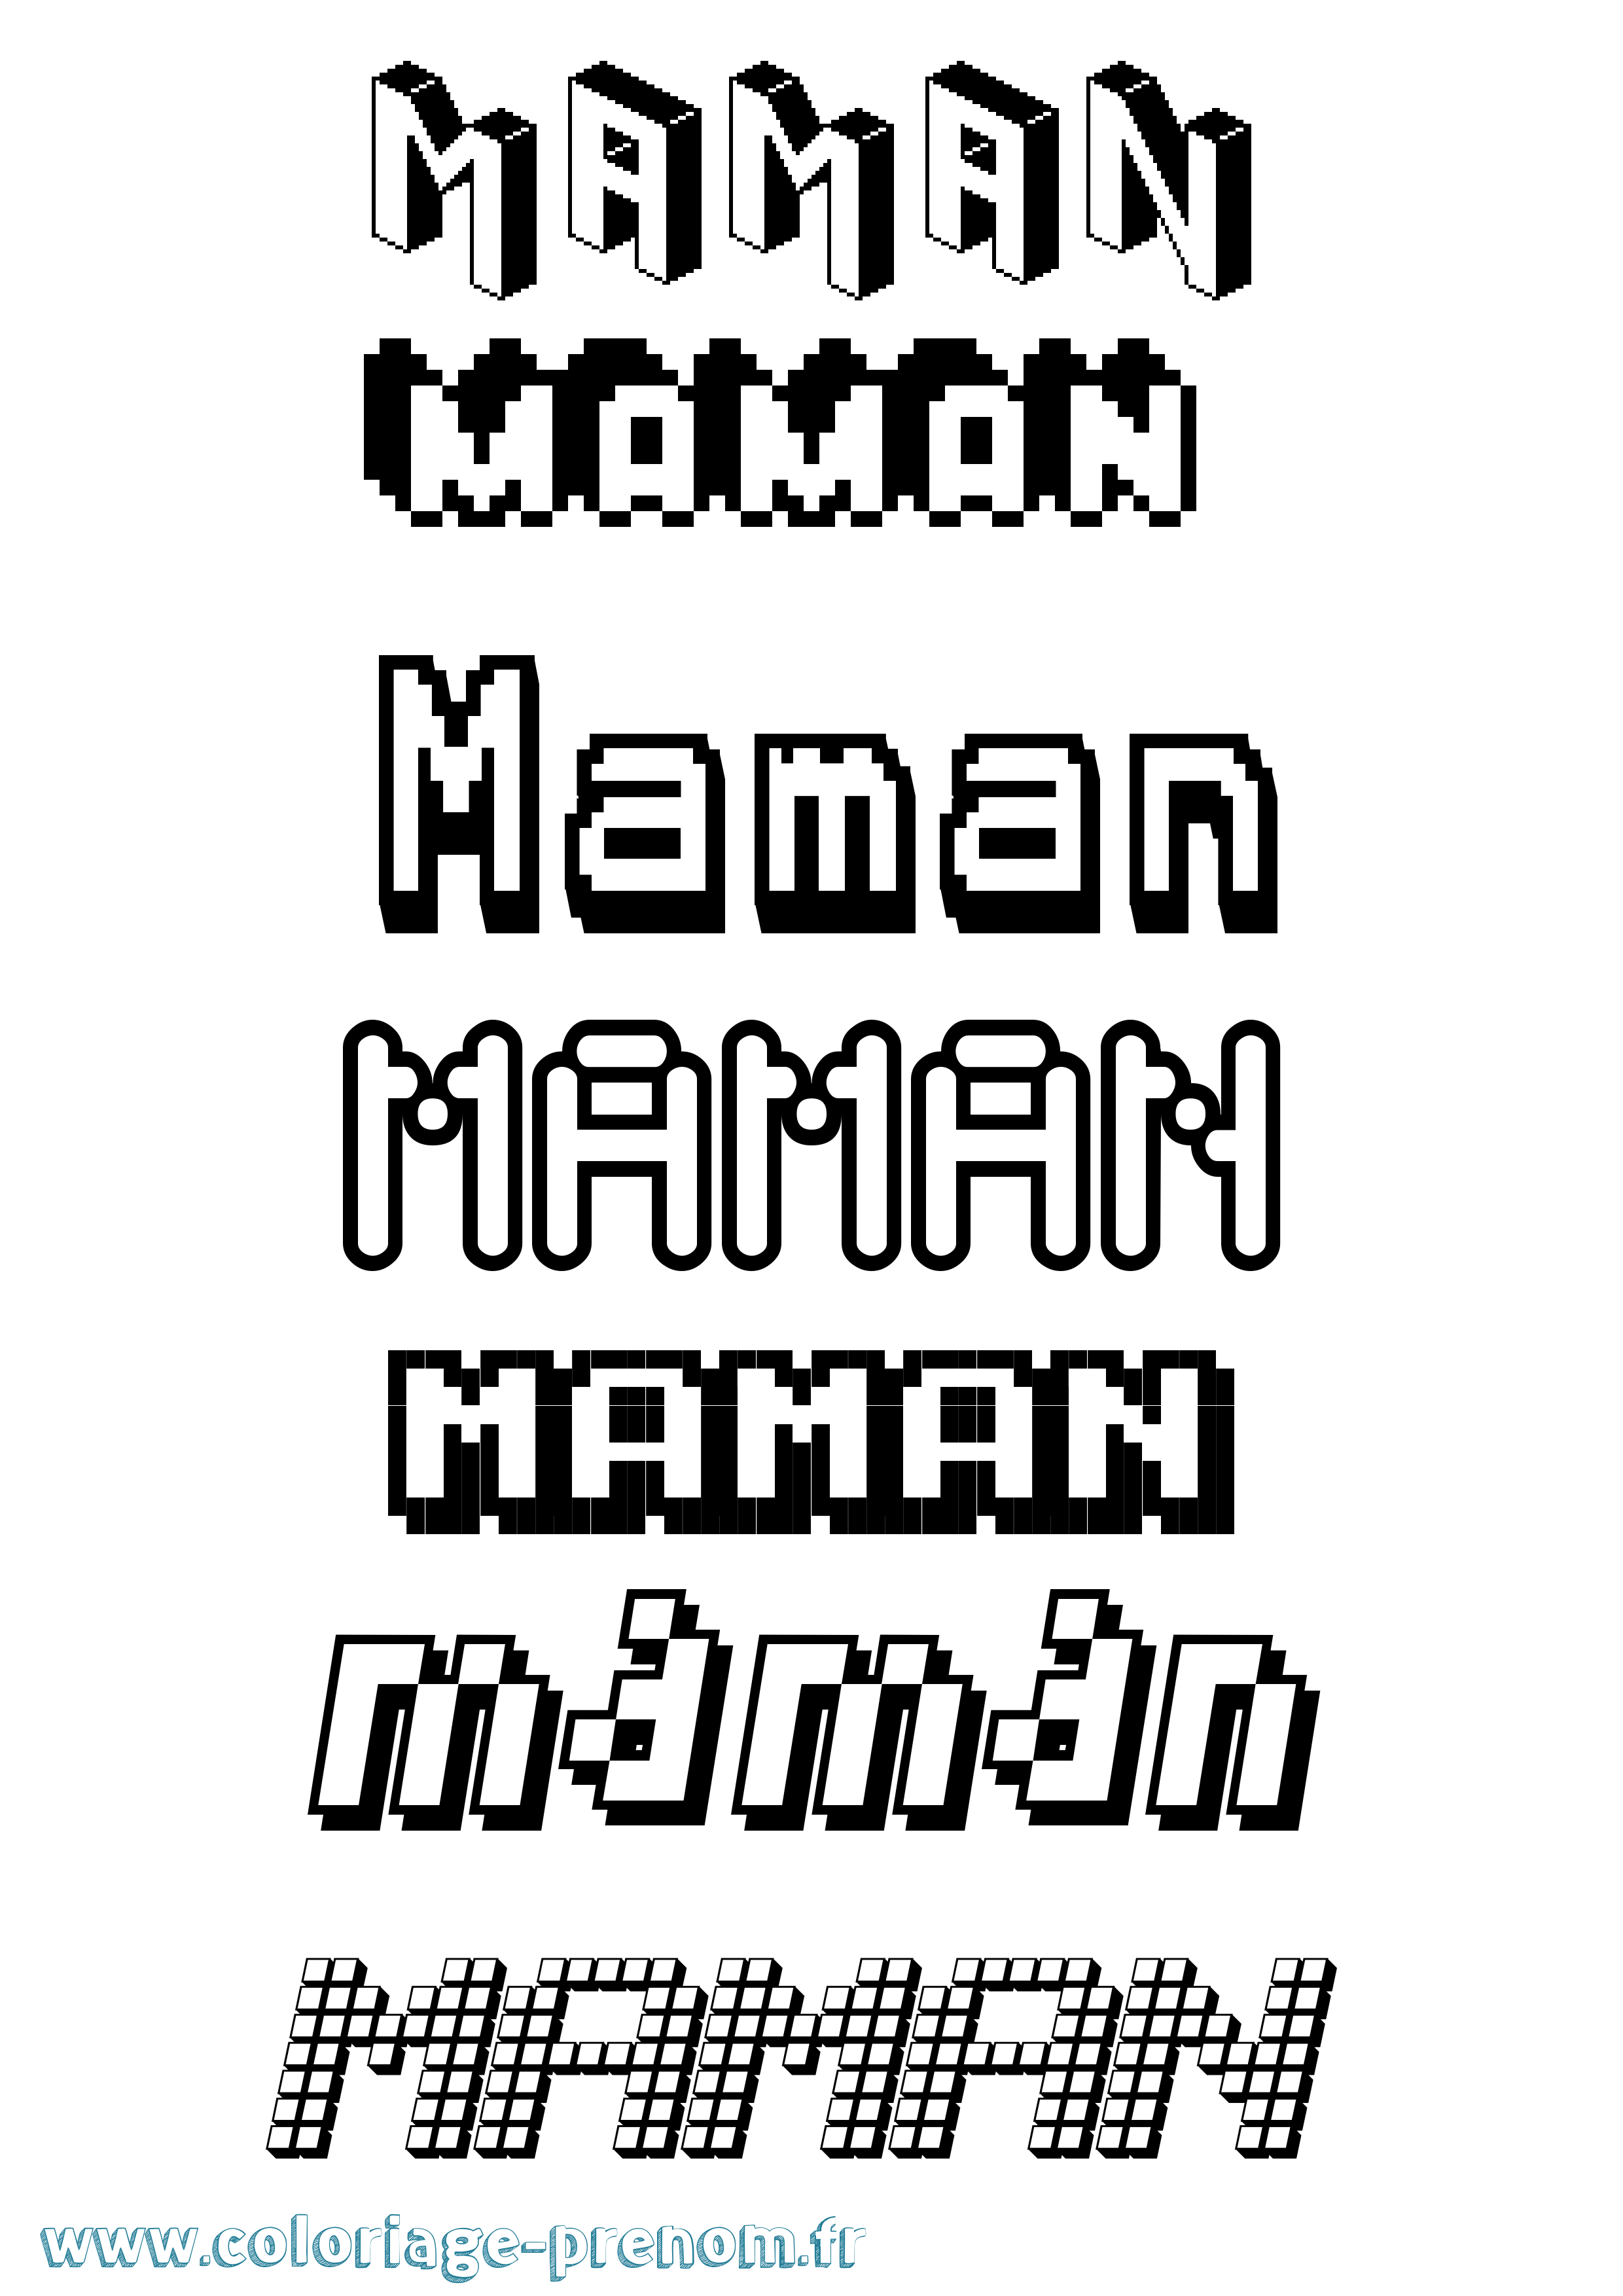 Coloriage prénom Maman Pixel